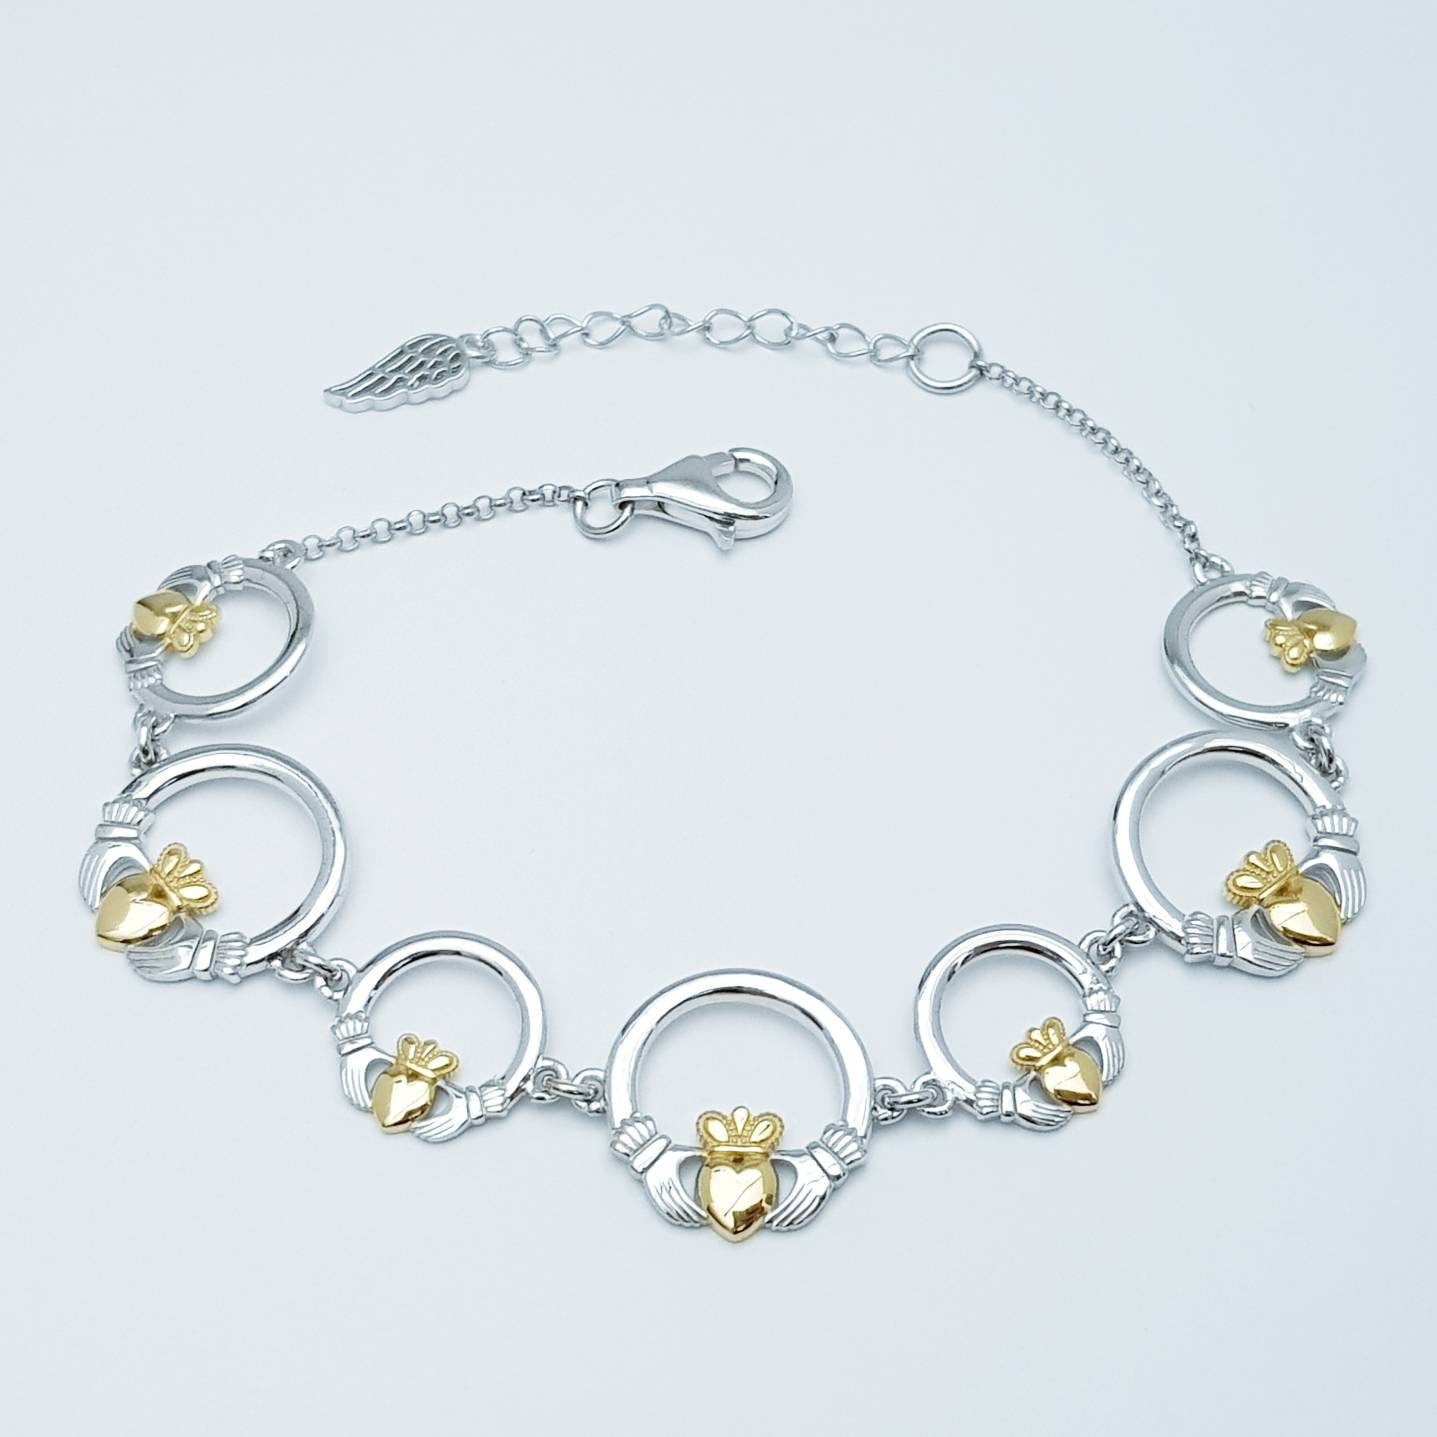 Claddagh bracelet, small claddagh bracelet, silver and gold claddagh bracelet